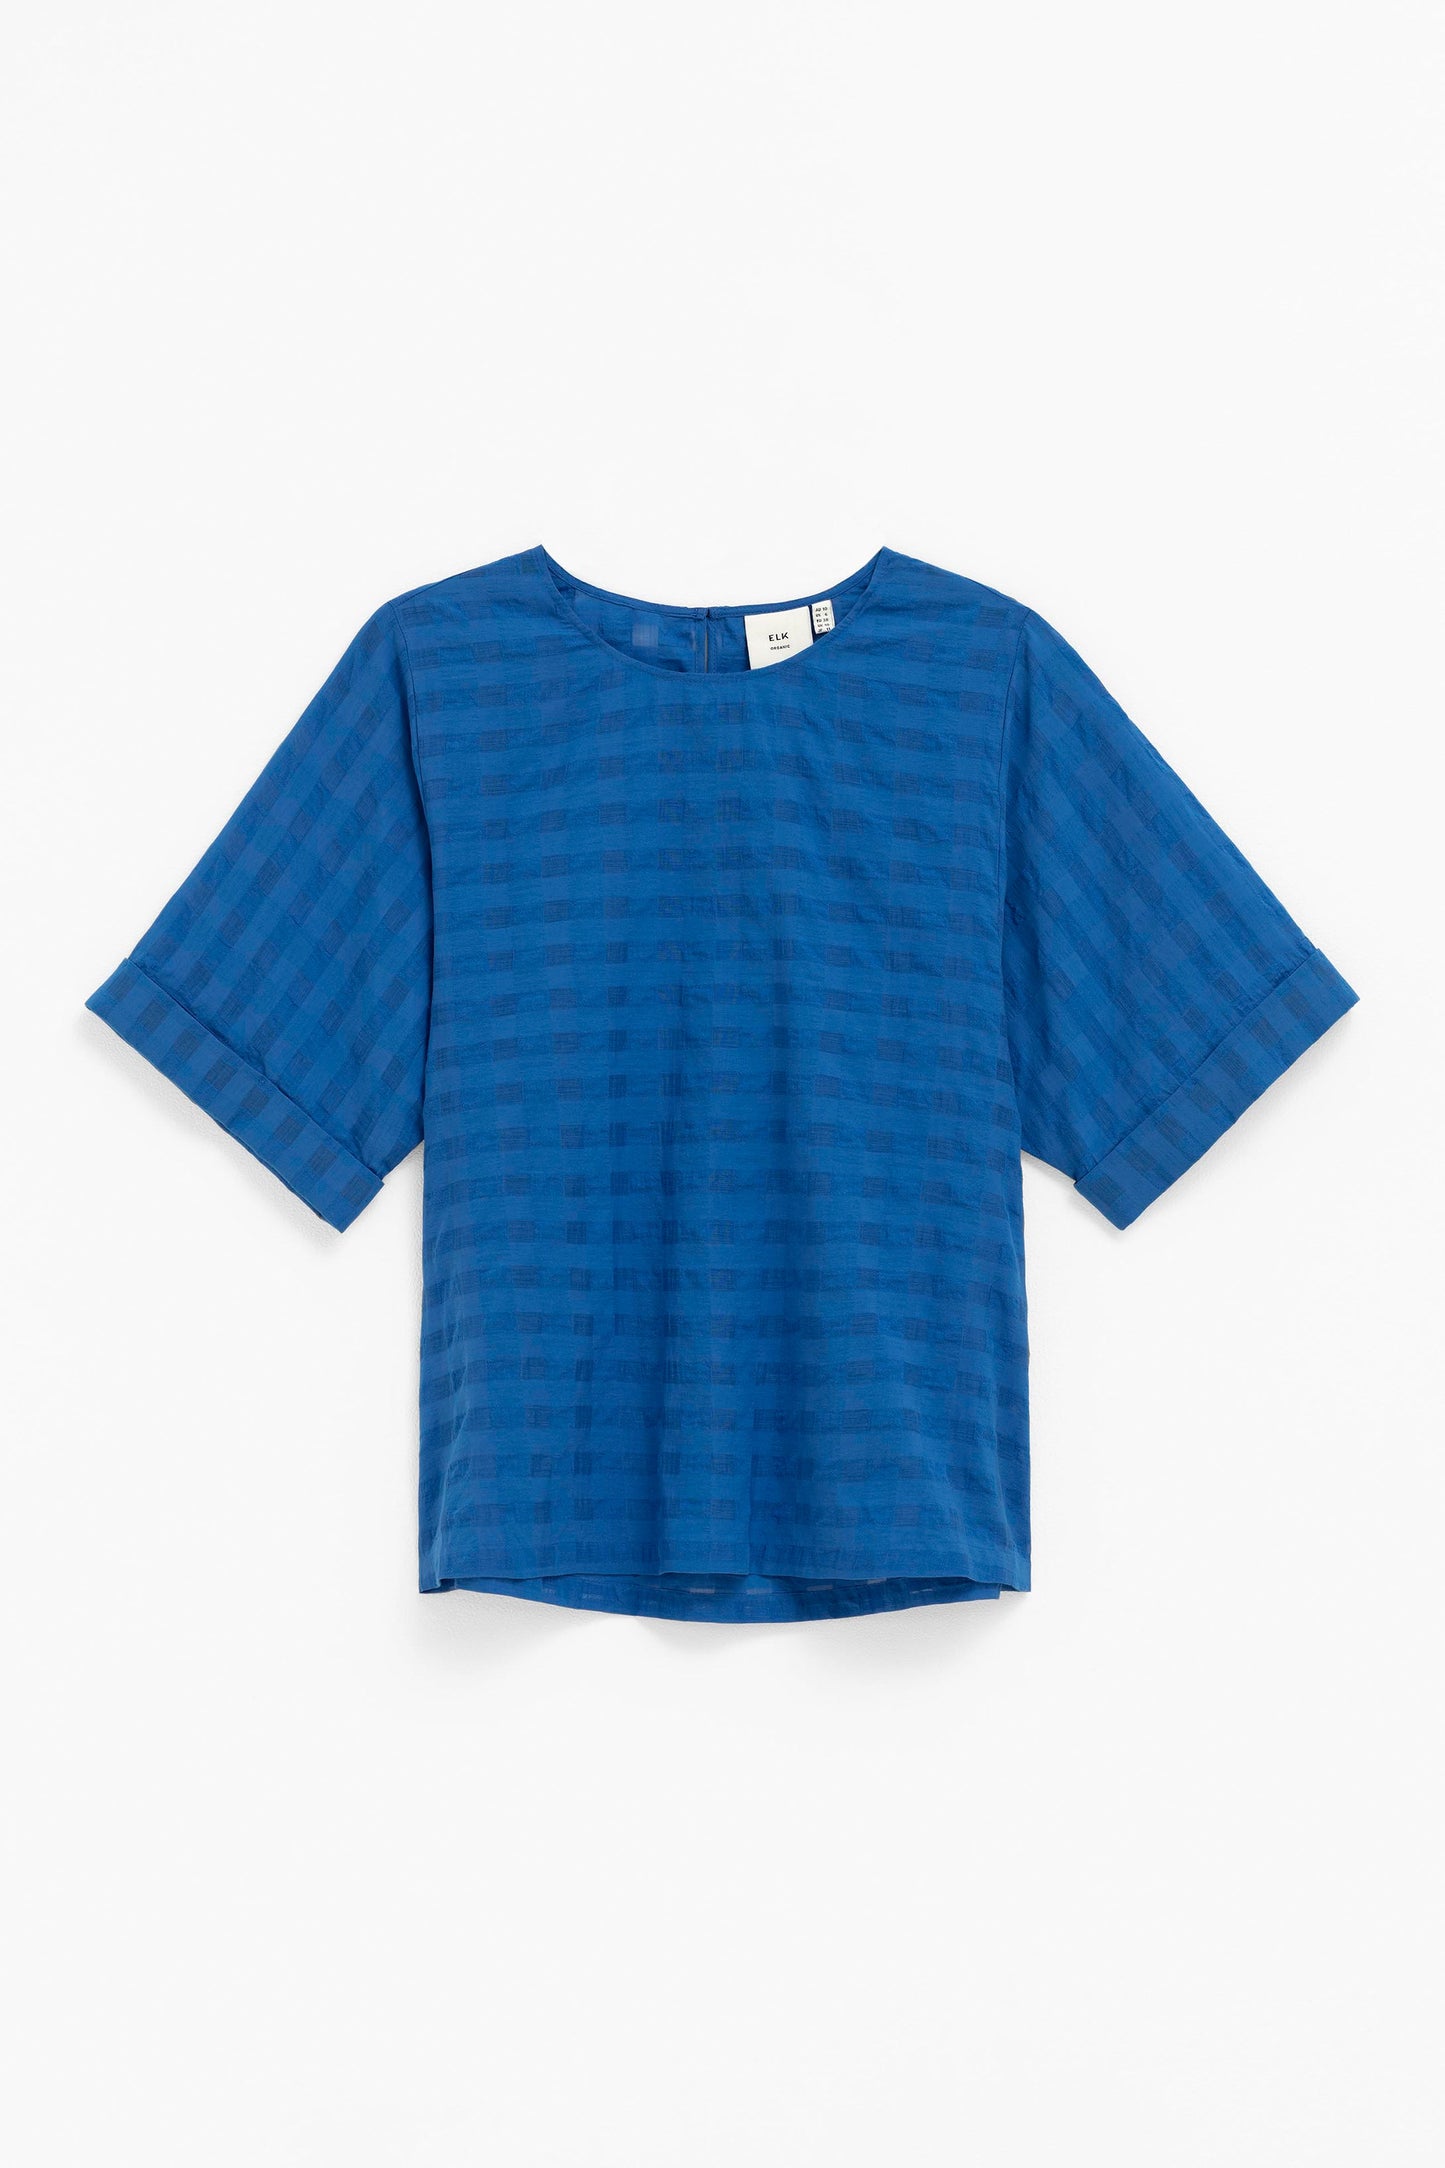 Leede Organic Cotton Woven Check Textured Short Sleeved Top Front | SEA BLUE